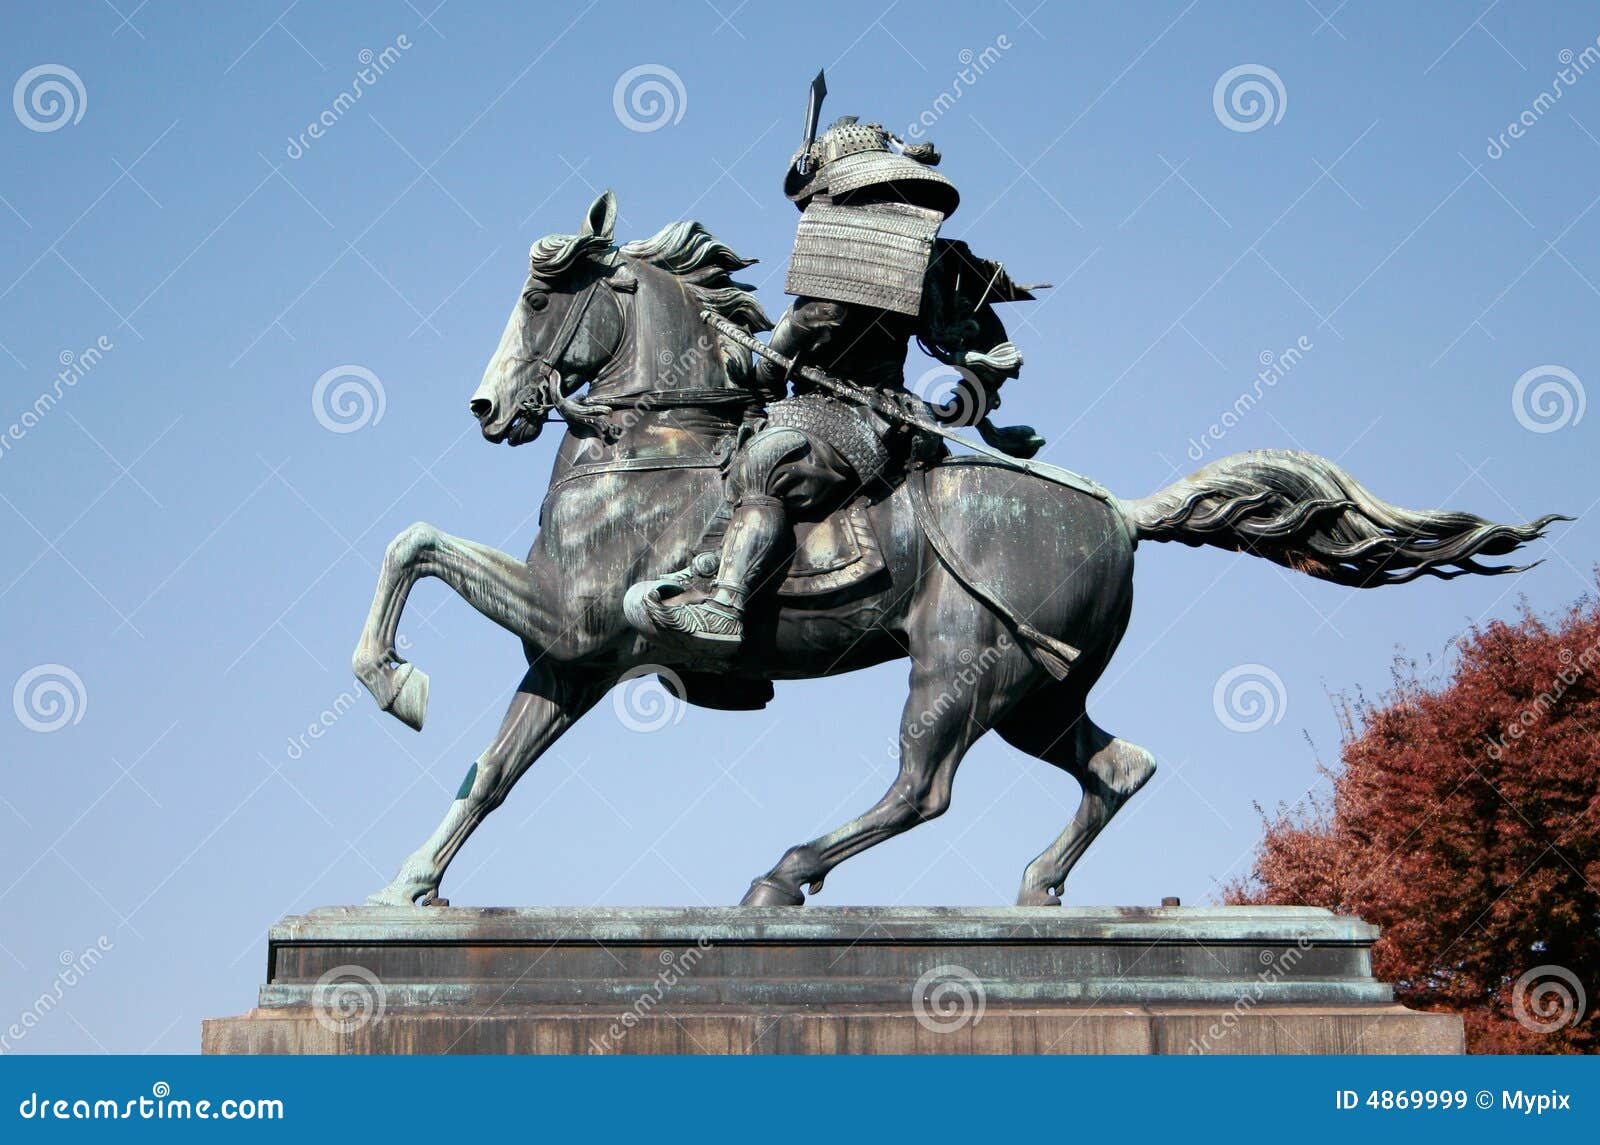 samurai riding horse